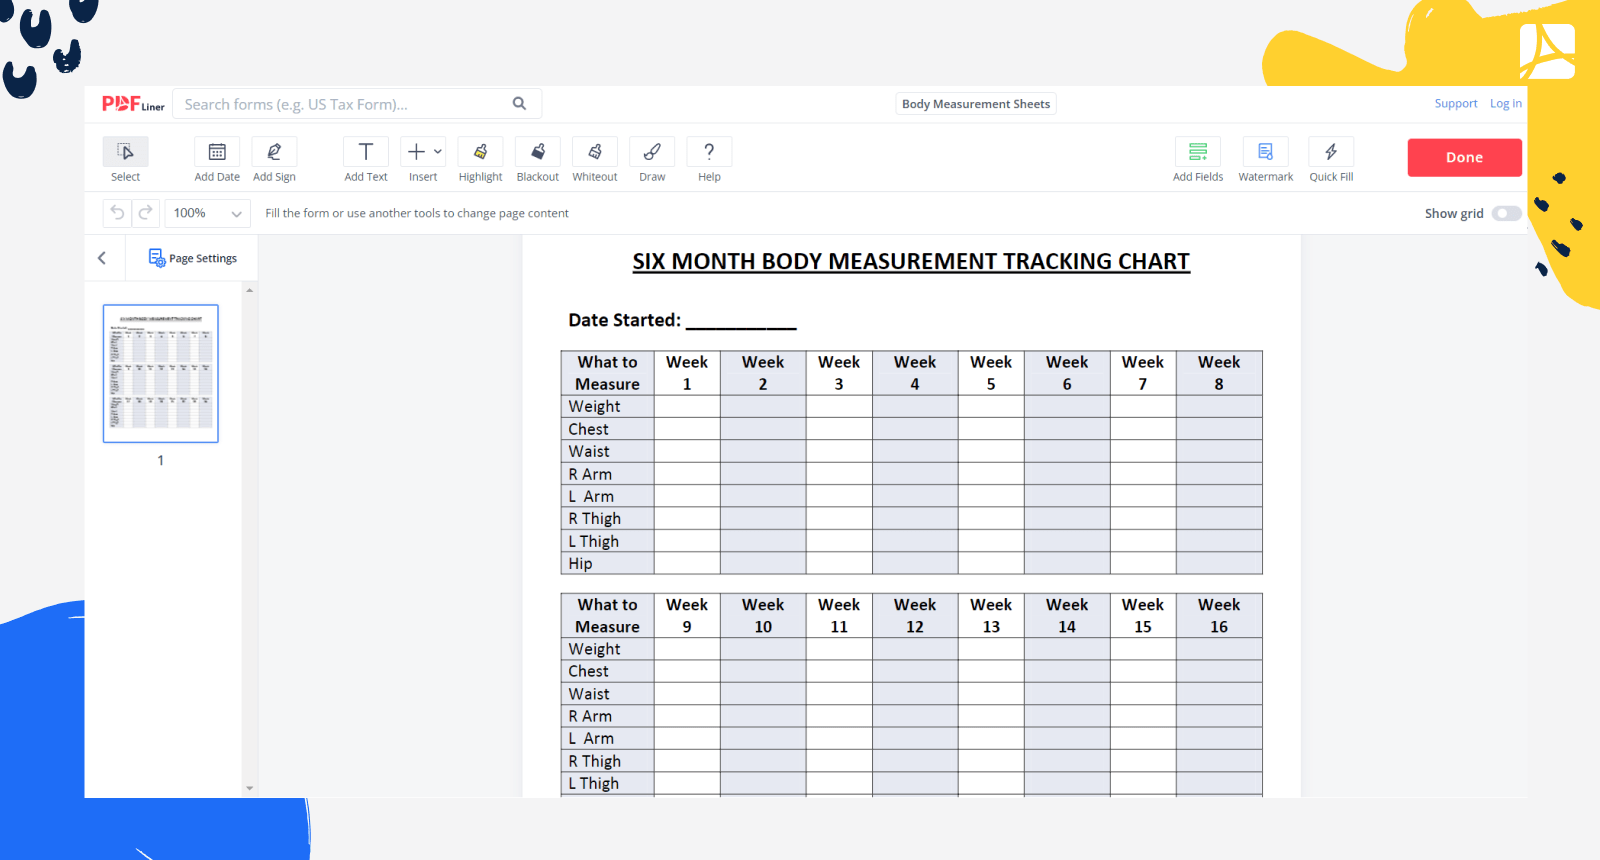 Body Measurement Sheets Form Screenshot